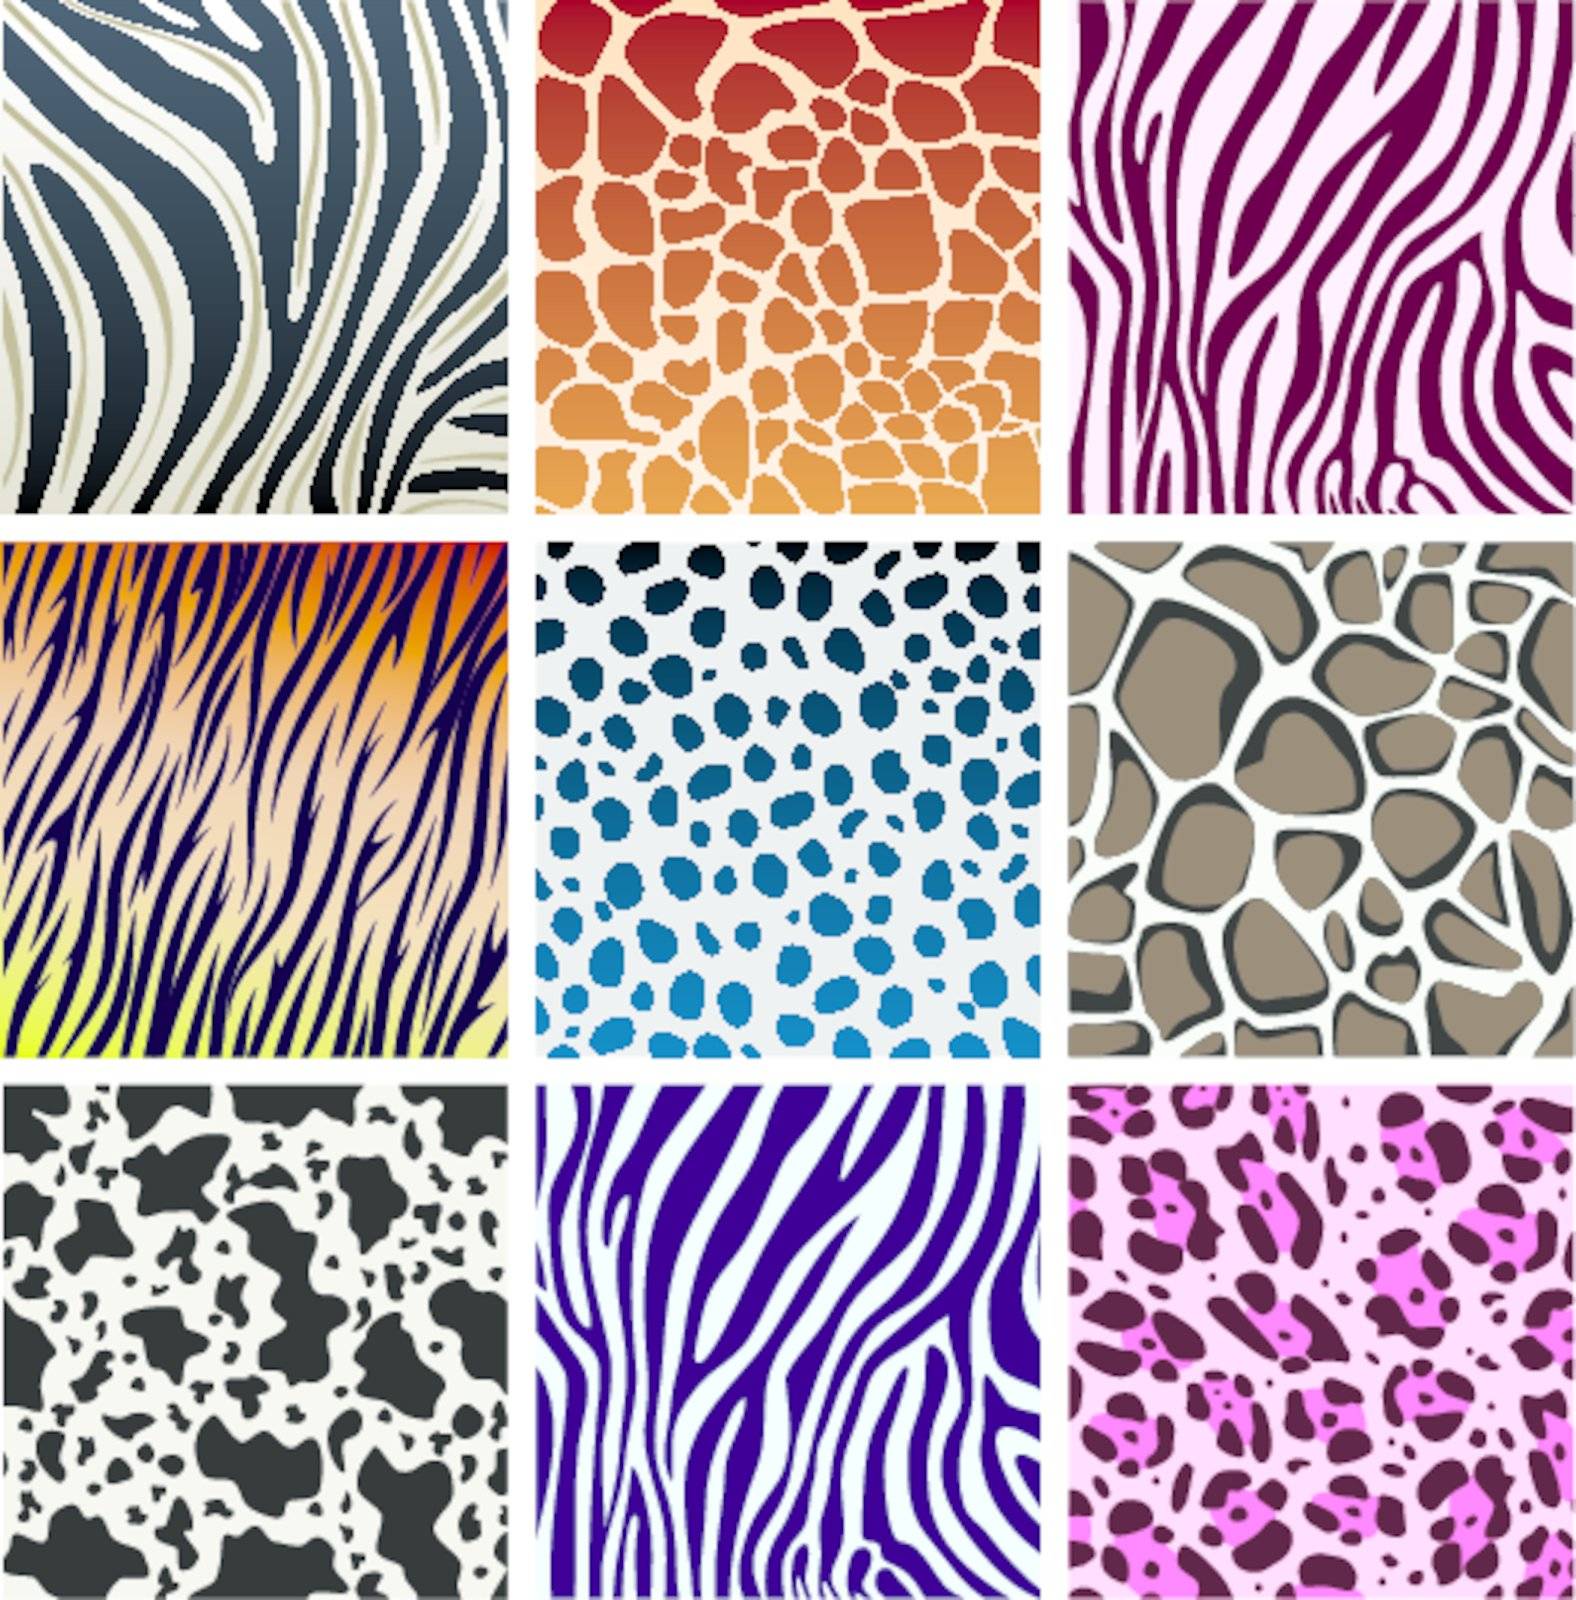 vector animal skin textures of tiger, zebra, giraffe, leopard, cow and cheetah